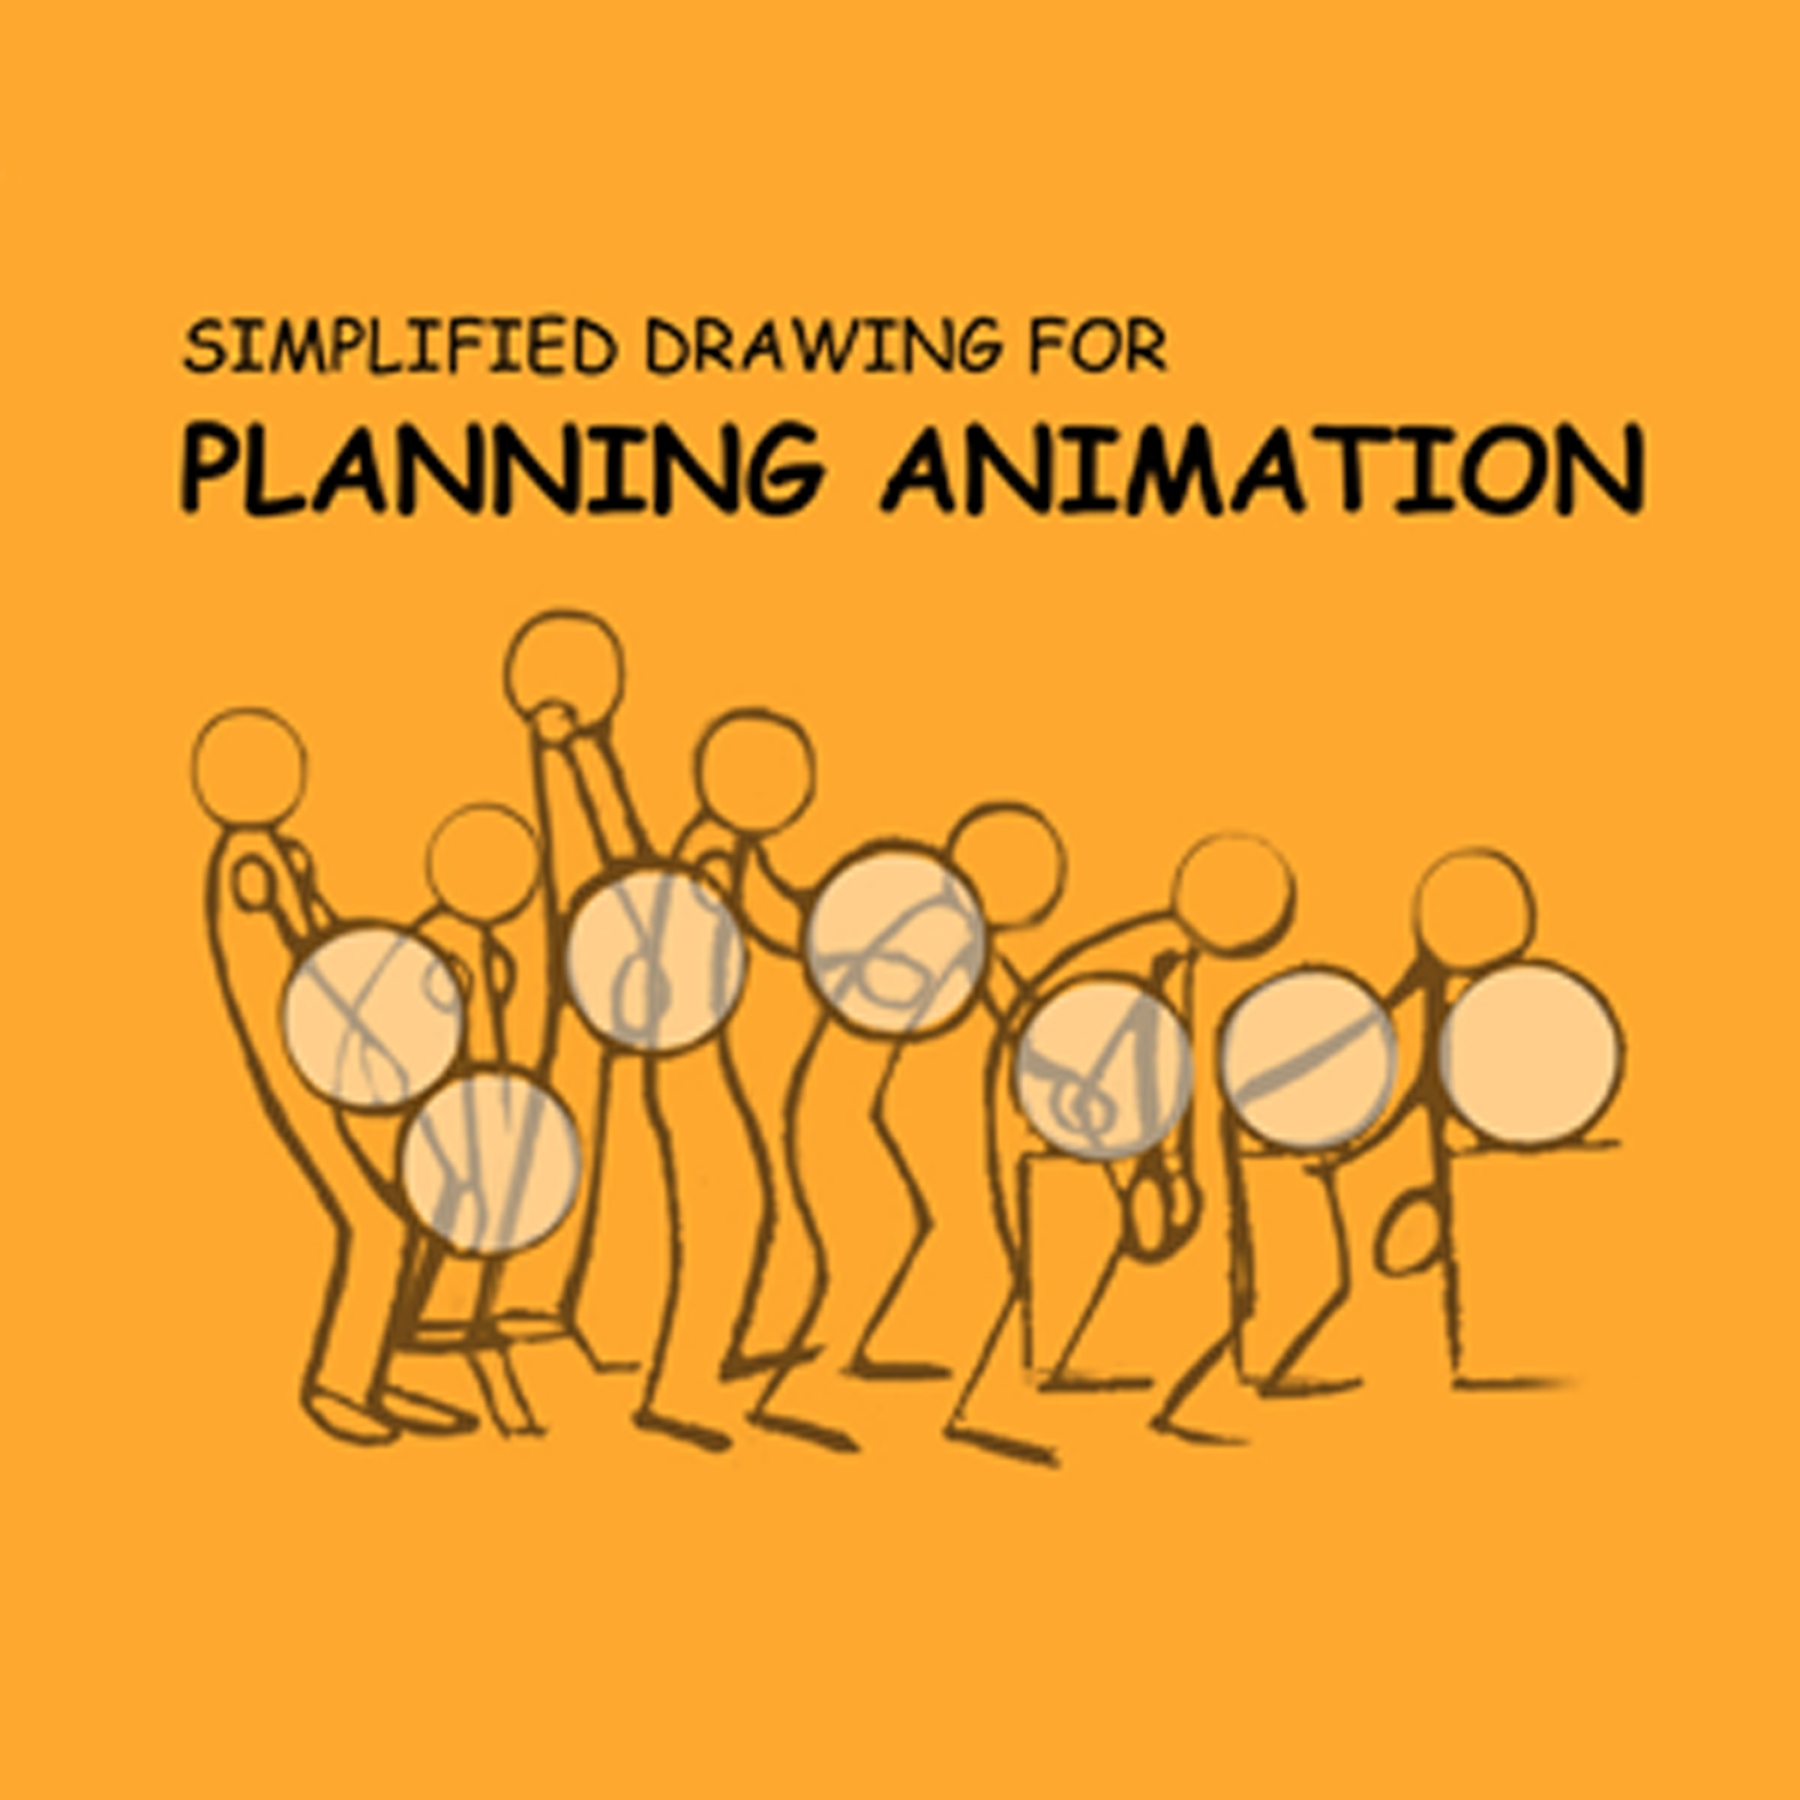 12 Principles of Animation